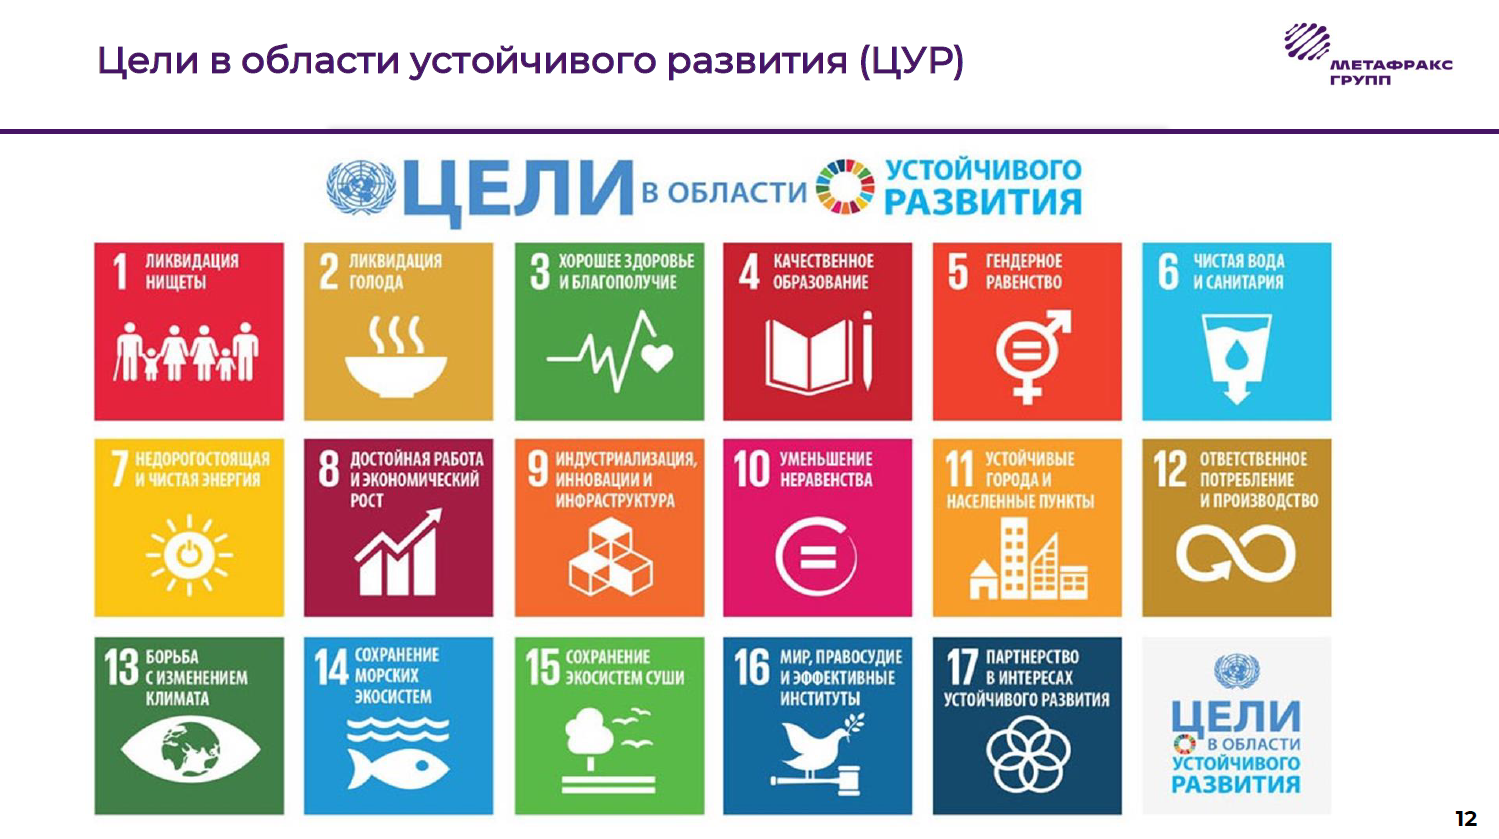 Задание устойчивое развитие. ЦУР цели устойчивого развития. Цели устойчивого развития ООН 2030. Цели устойчивого развития в регионах. План устойчивого развития.